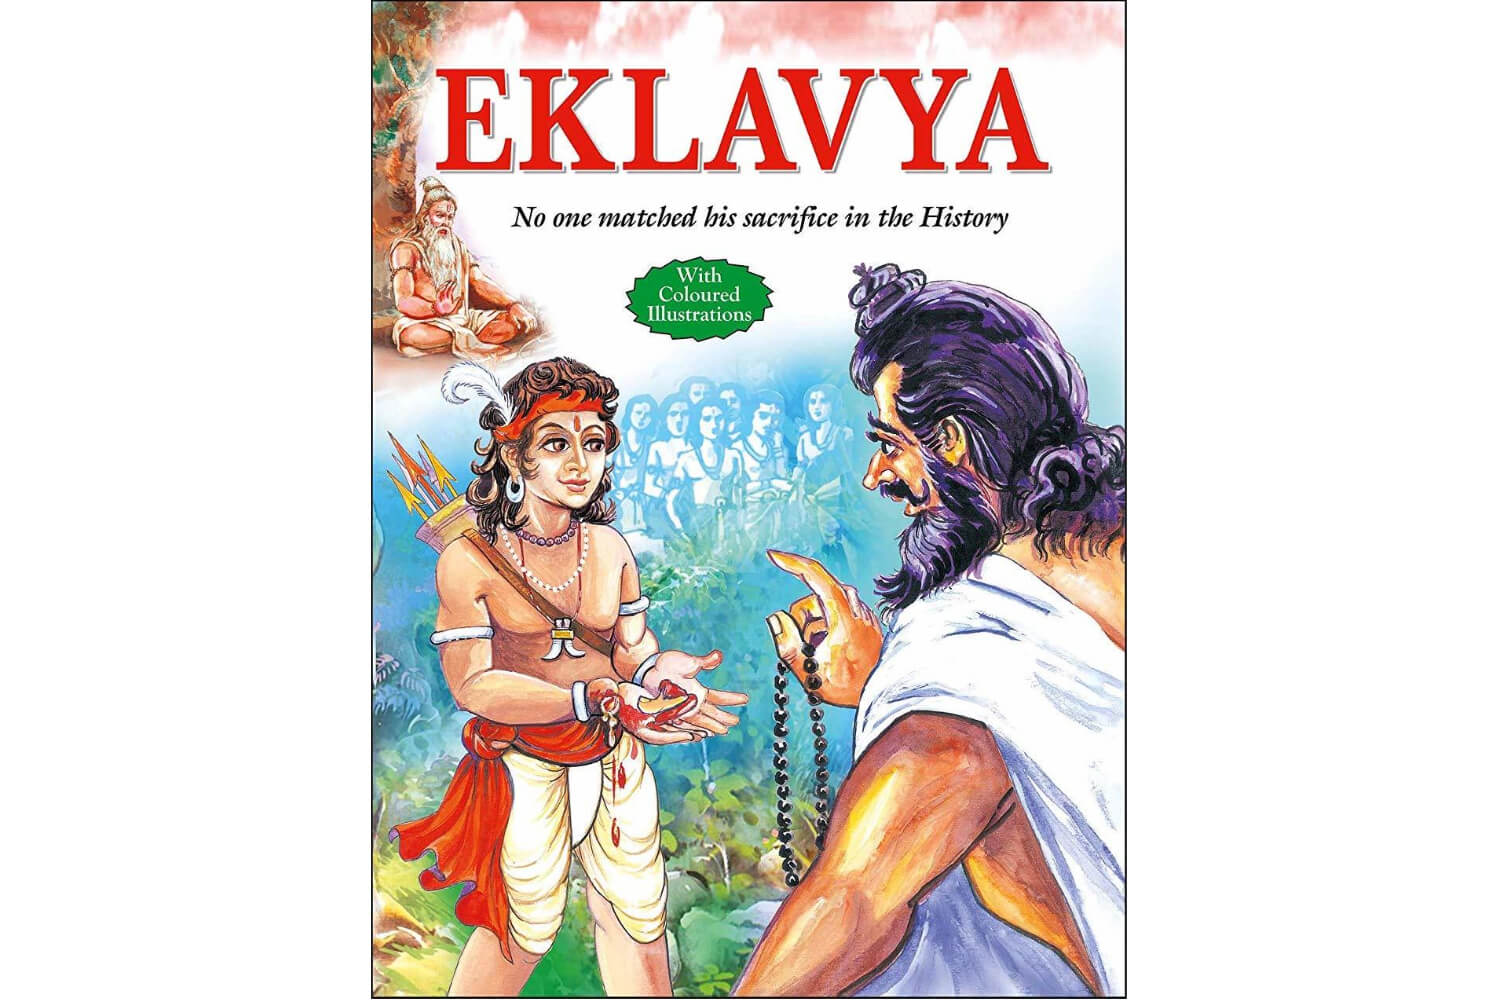 Ekalavya's Devotion to His Teacher